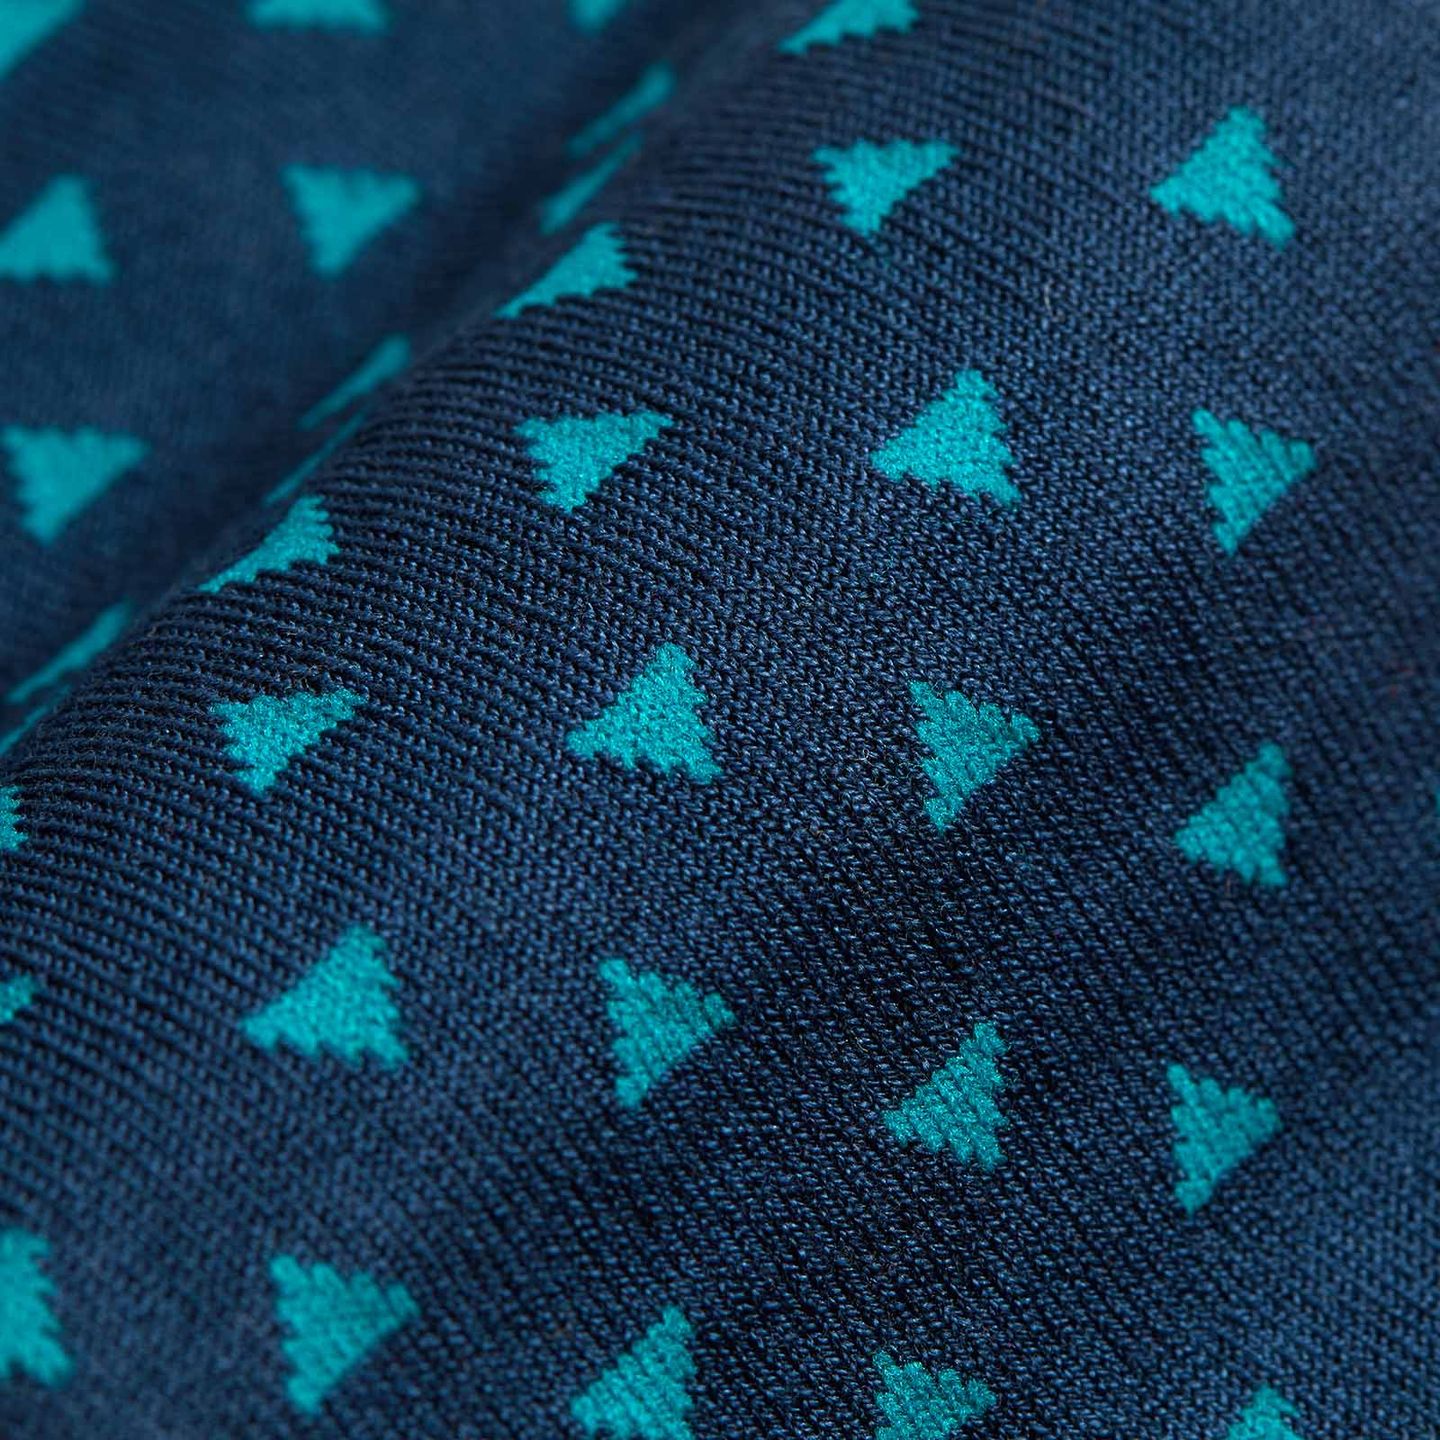 A close up of small light blue triangles on dark blue socks